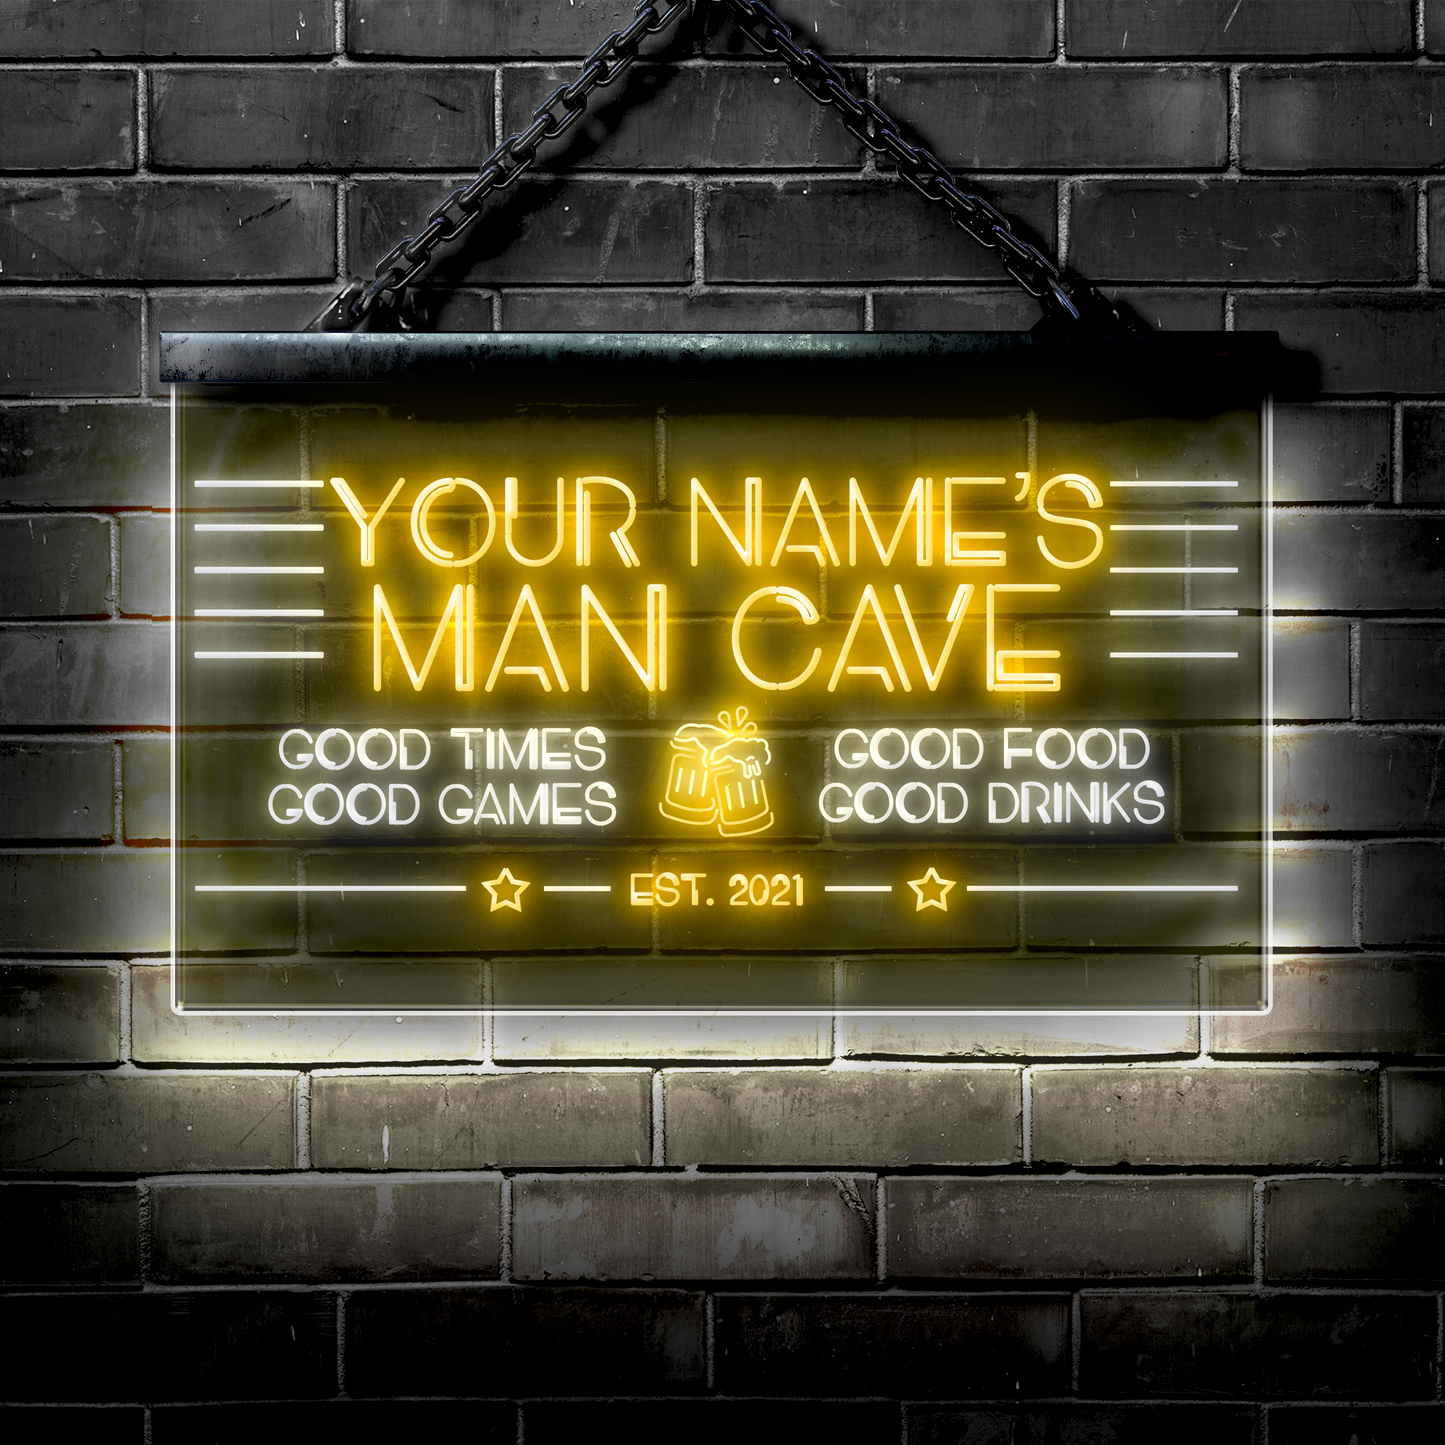 Customized LED Bar Sign: Man Cave Bar Good Times